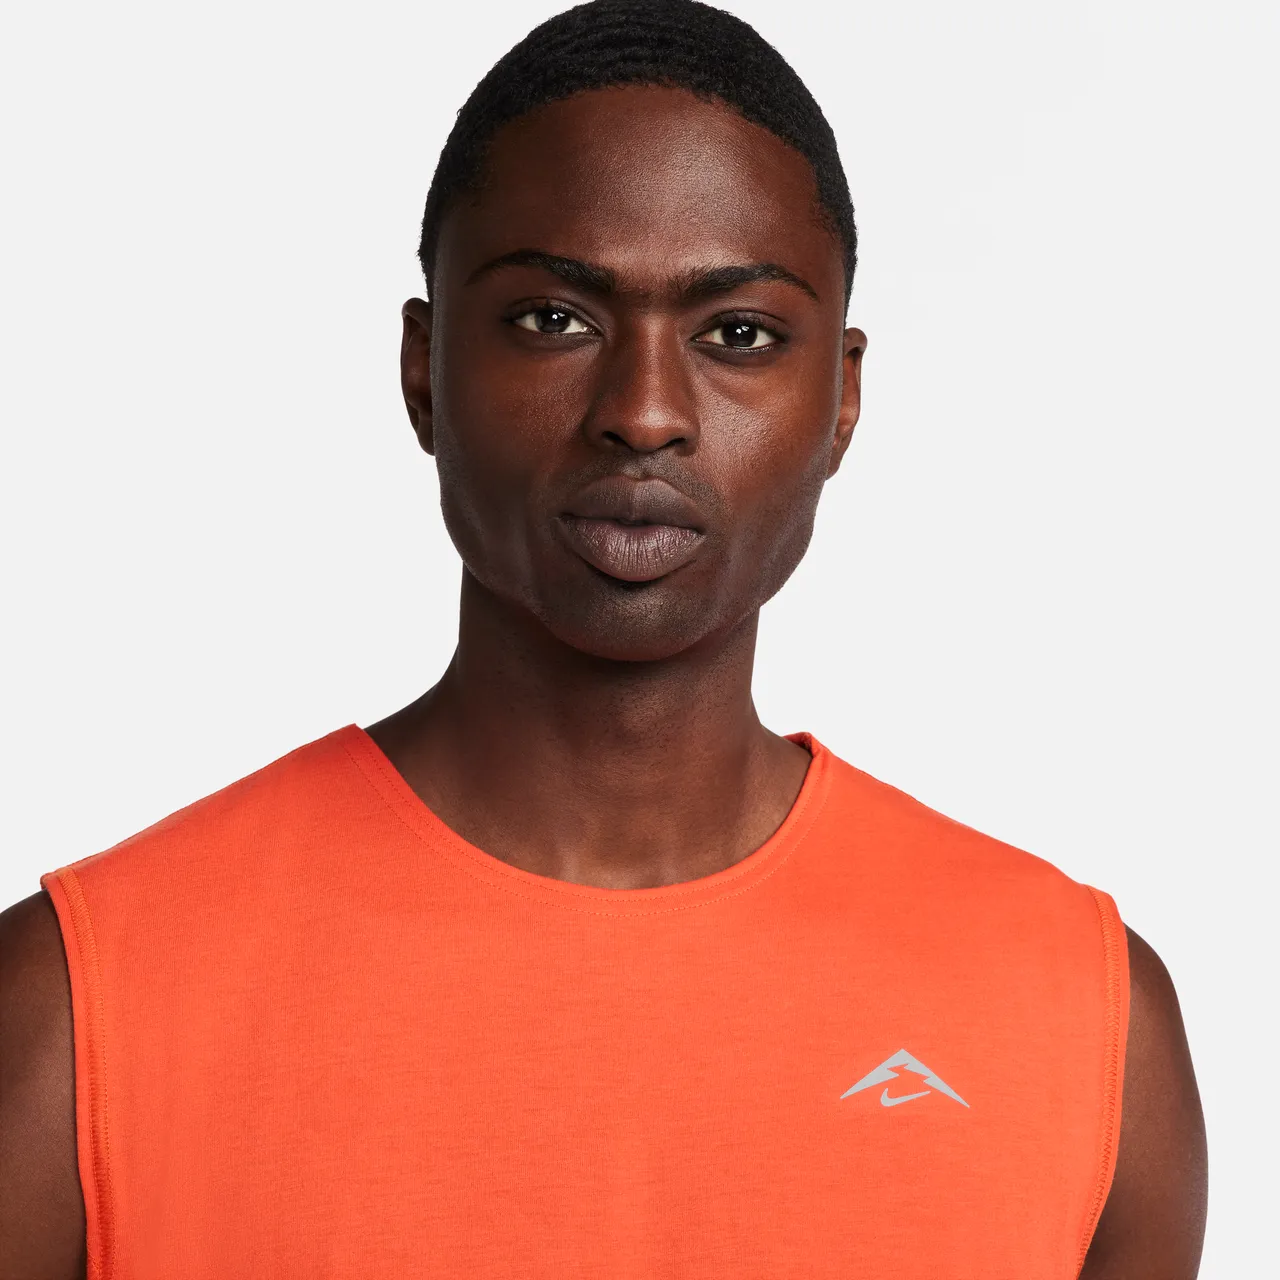 Nike Trail Solar Chase Men's Dri-FIT Sleeveless Running Top - Orange - Polyester